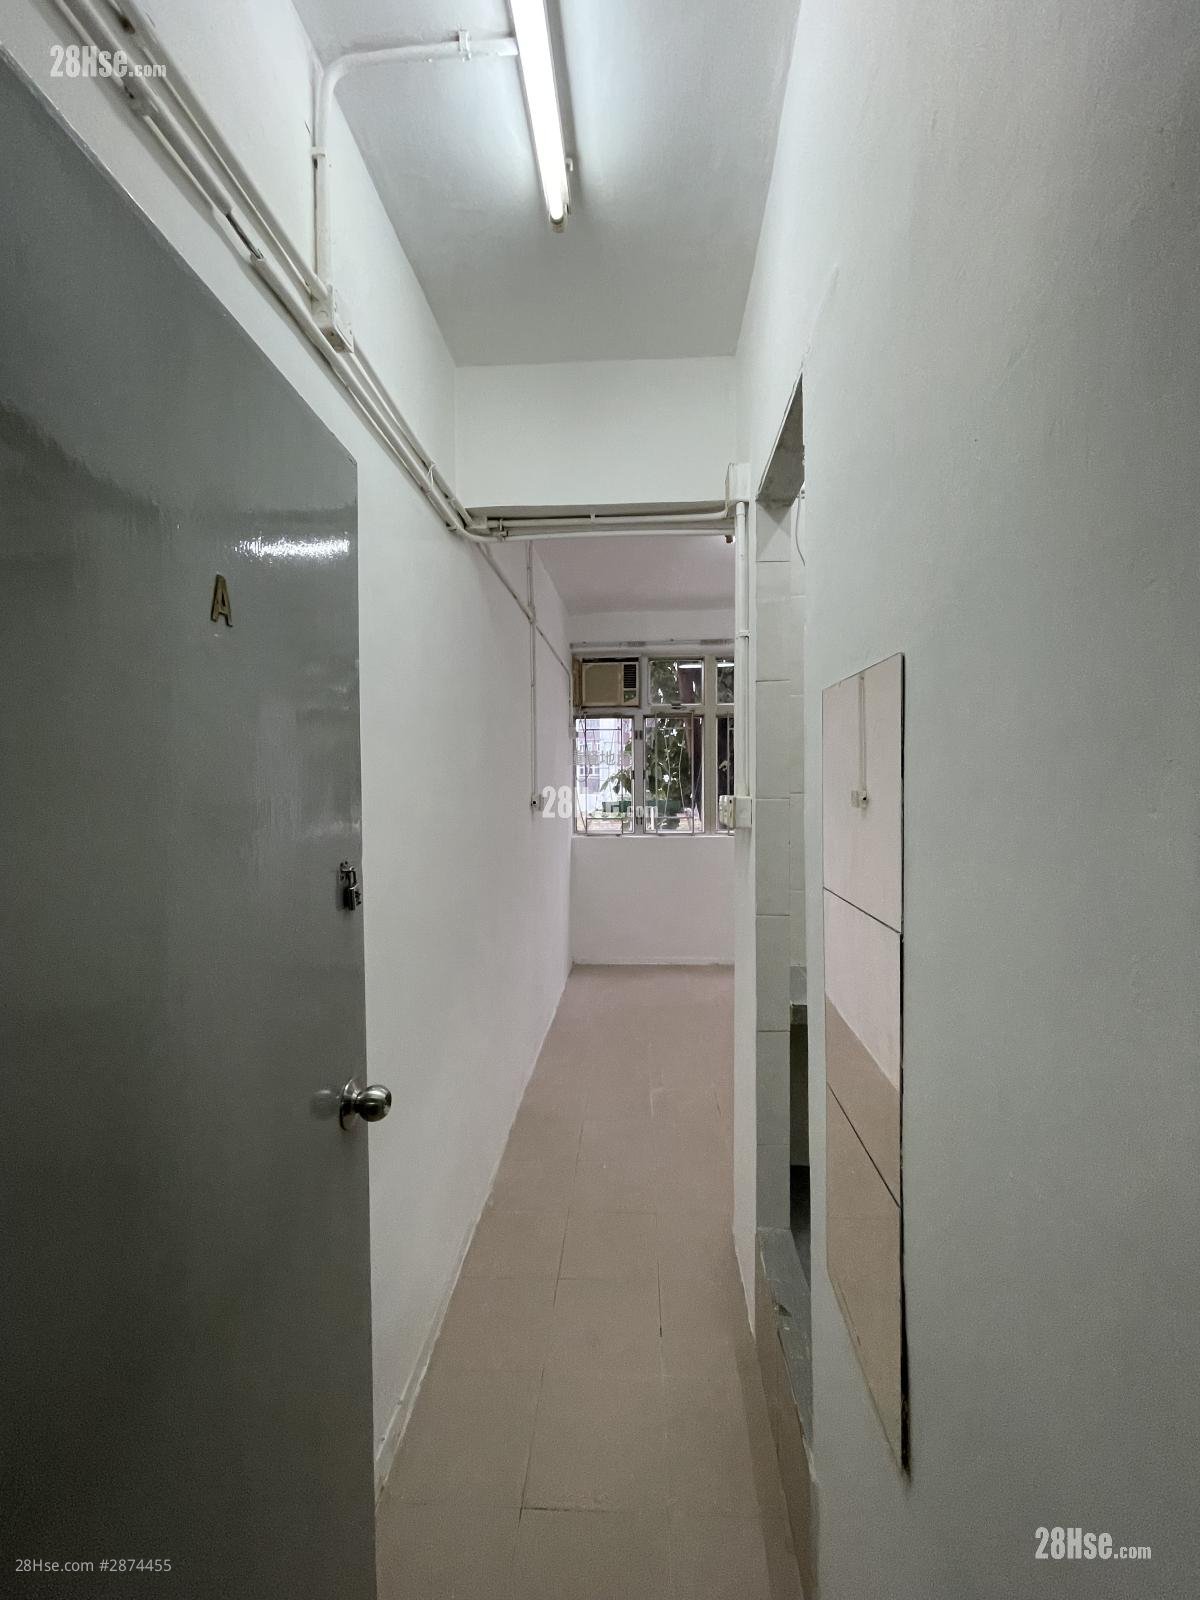 Yin Hing Building Rental Studio , 1 bathrooms 140 ft²